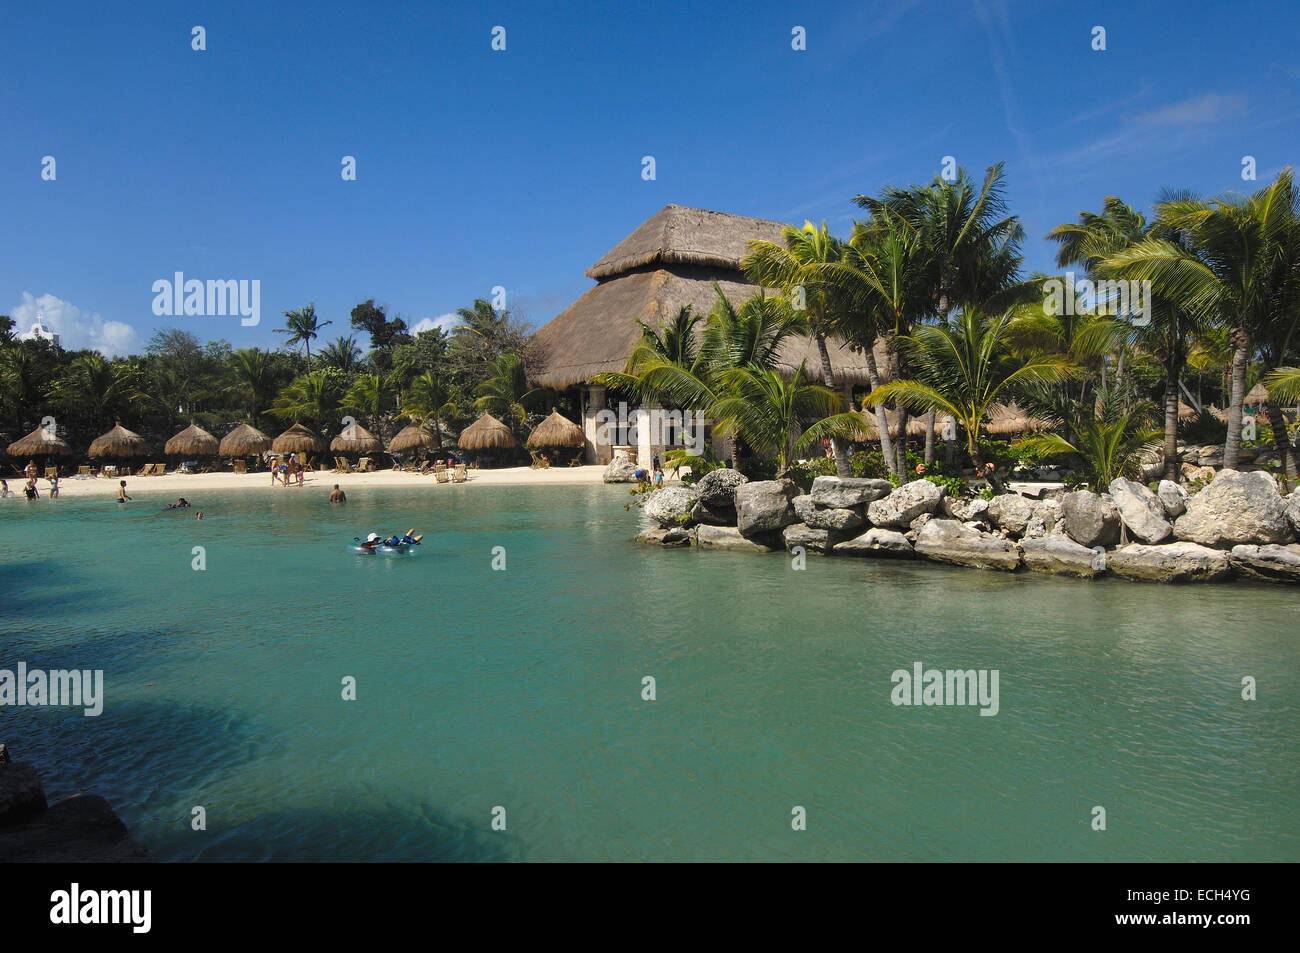 Beach-Bereich, Xcaret, Öko-archäologischen Park, Playa del Carmen Quintana Roo Zustand, Riviera Maya, Halbinsel Yucatan, Mexiko Stockfoto